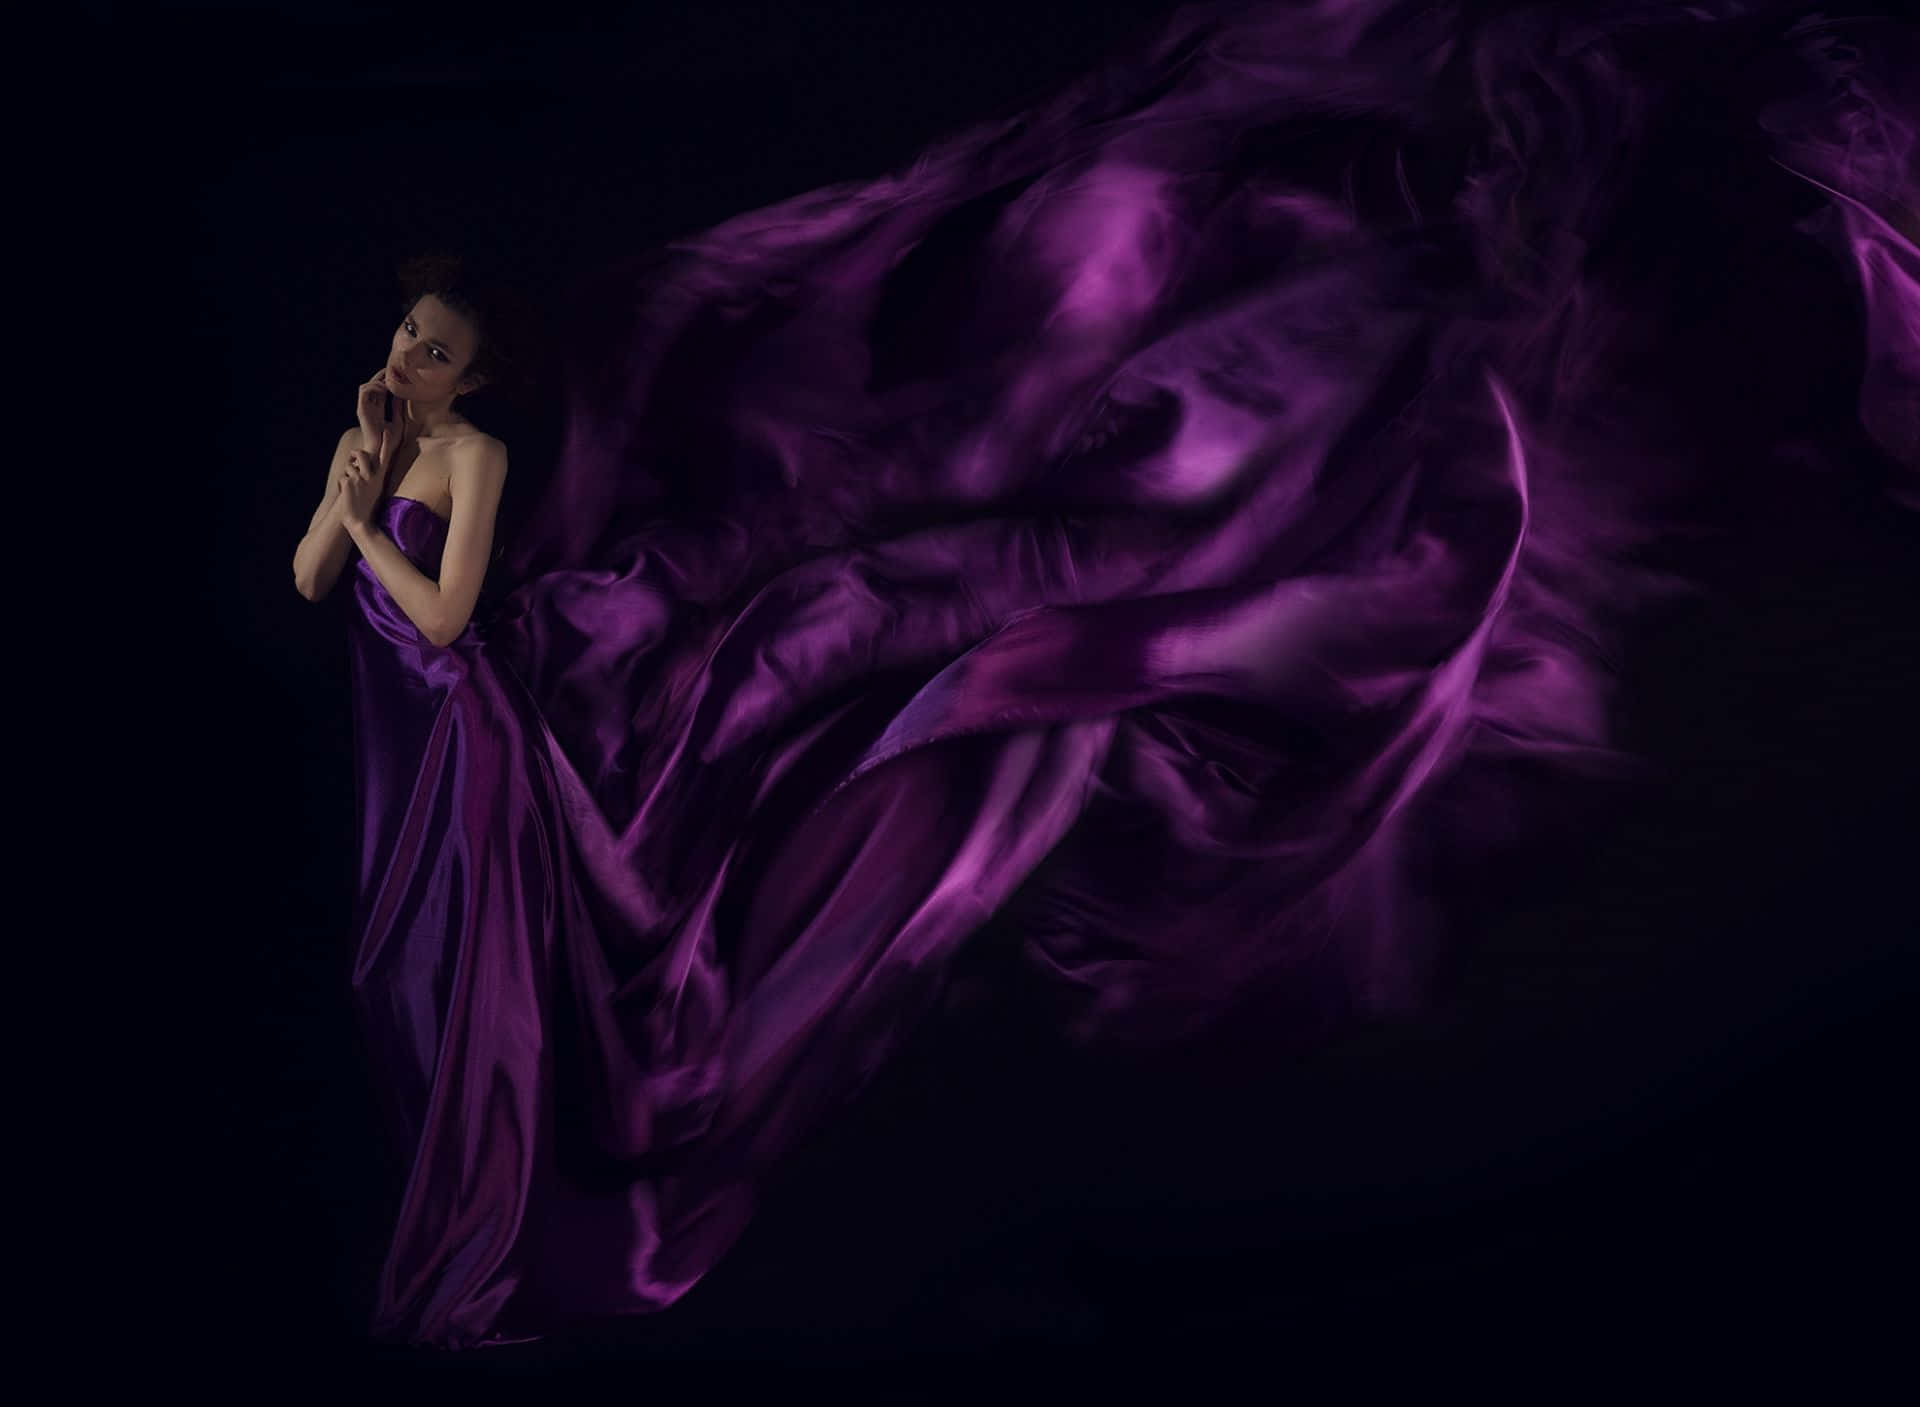 Look Radiant in a Stunning Purple Dress Wallpaper